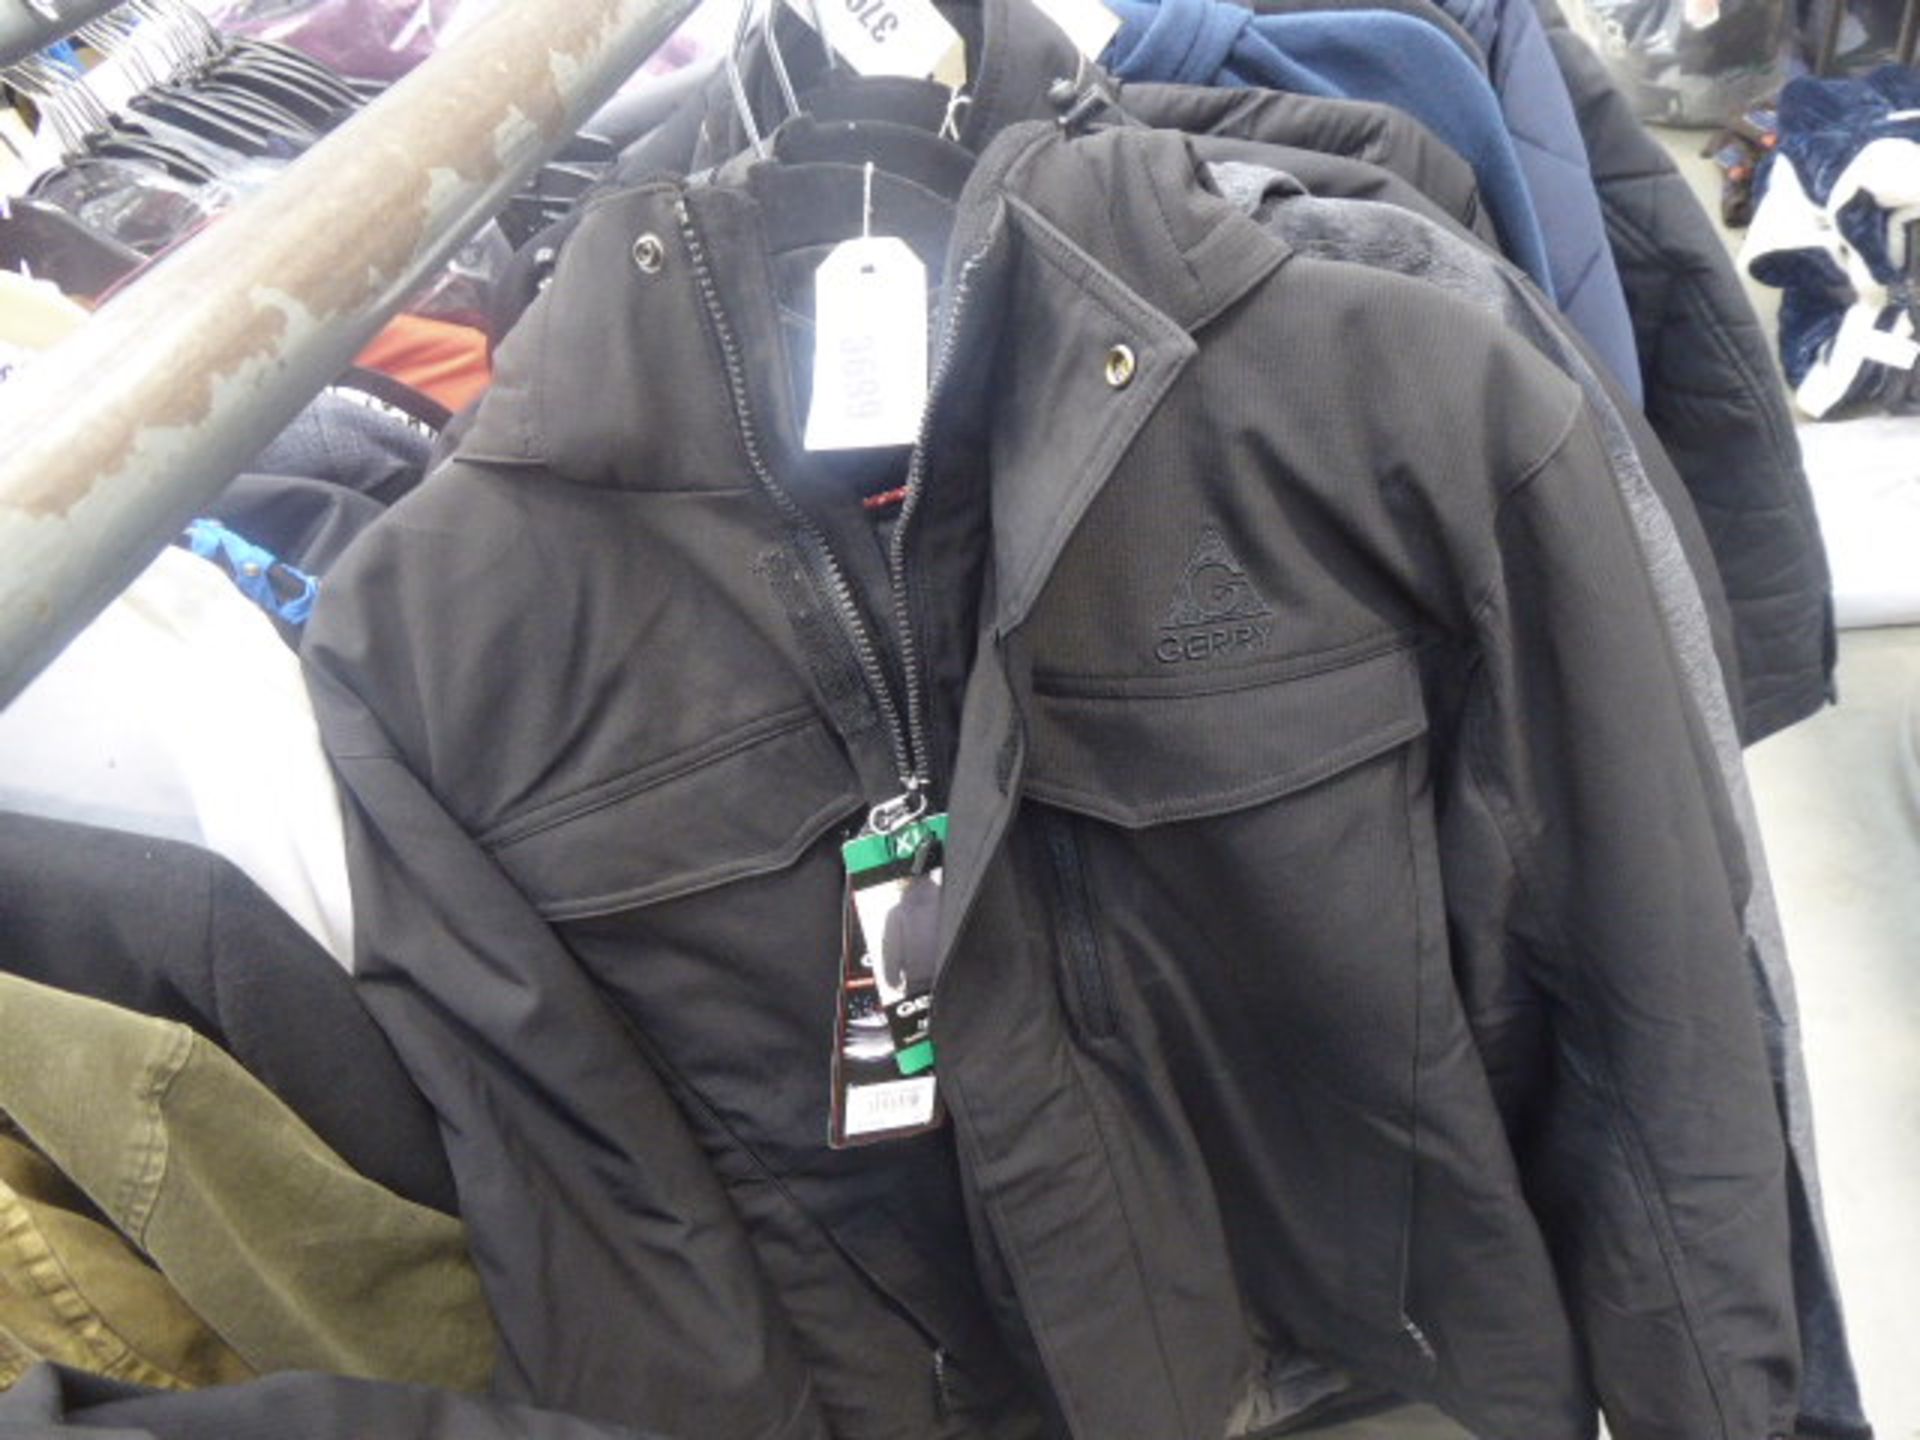 Full zipped hooded Jerry coat